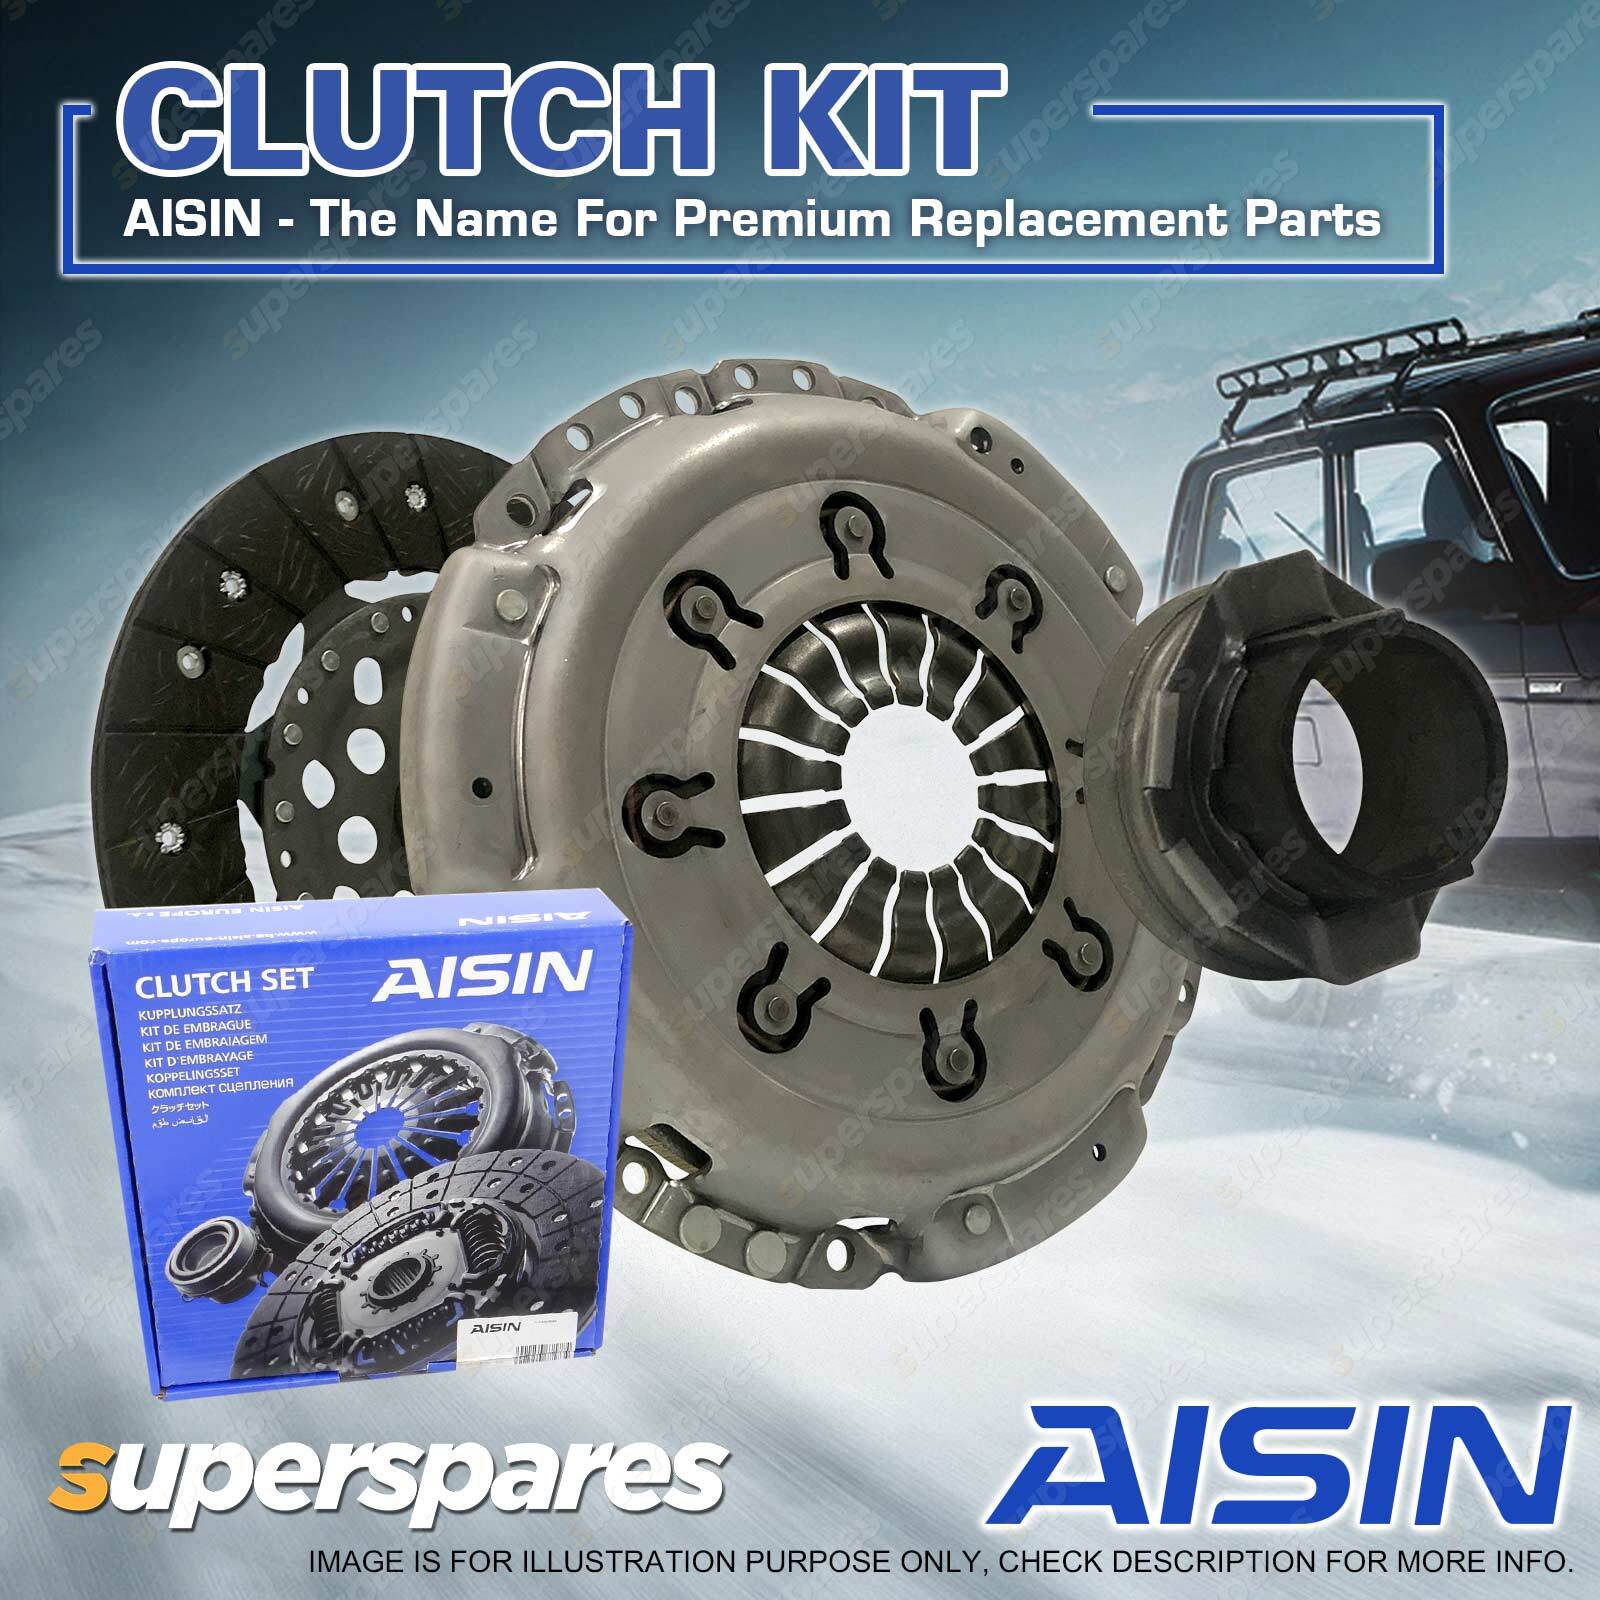 Aisin Clutch Kit For Toyota Corolla Ae101 Ae102 Ae111 Ae112 Ae91 Ae93 94 96